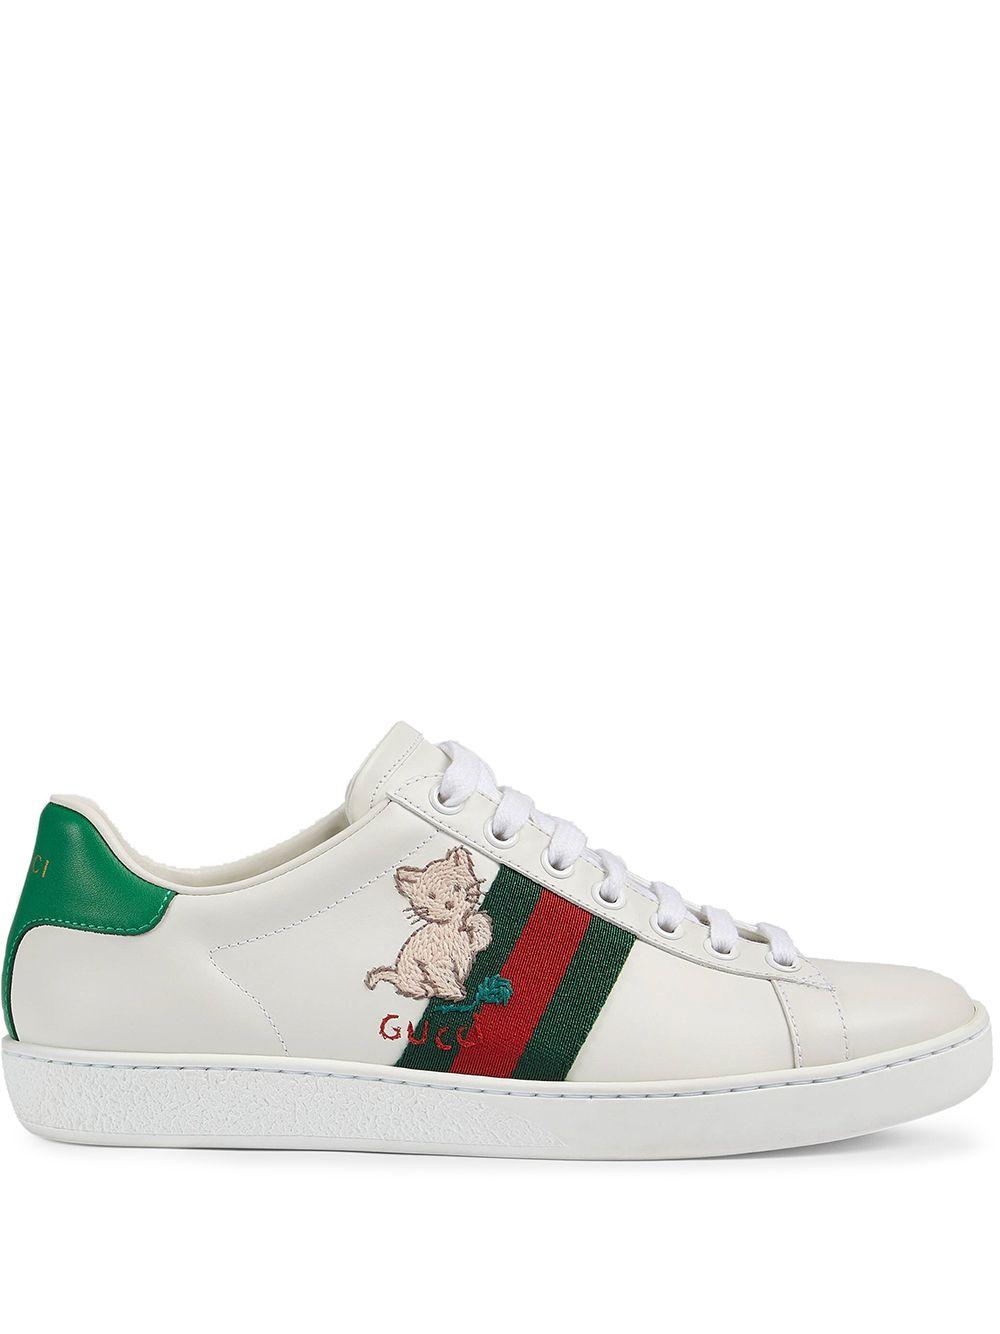 Gucci Kitten Ace Sneakers in White |